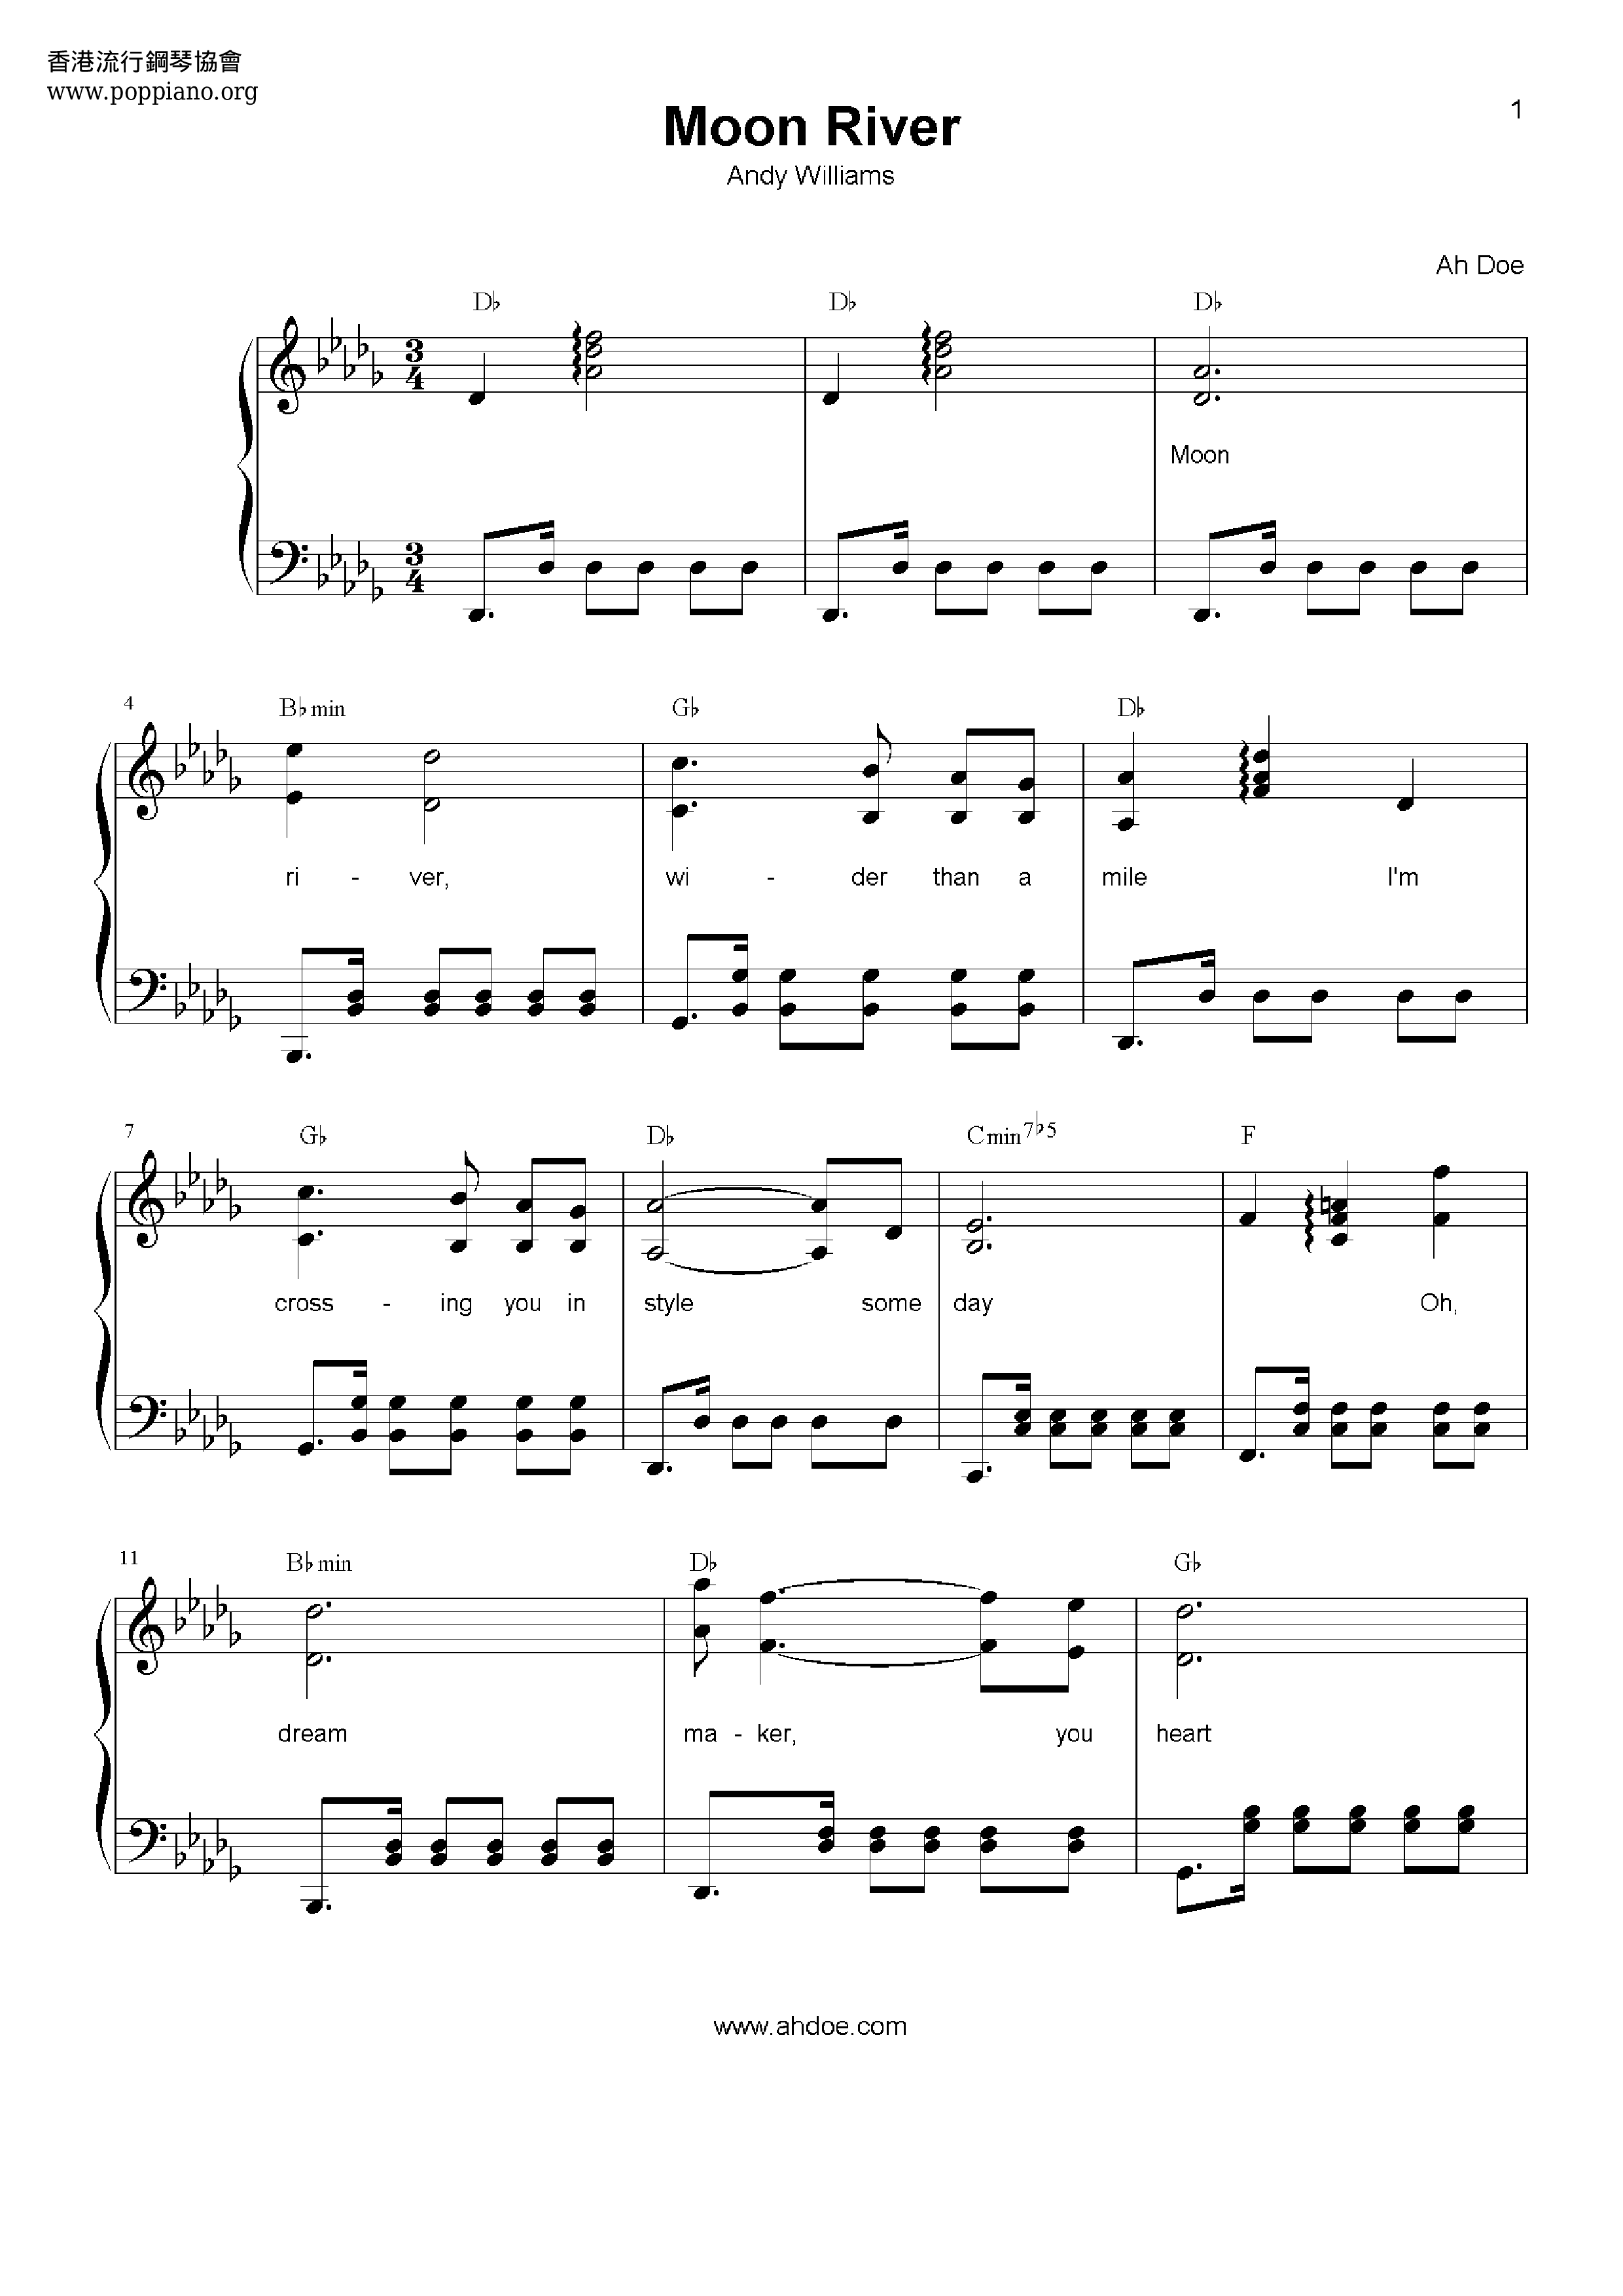 Moon River (From Breakfast at Tiffany's) Score